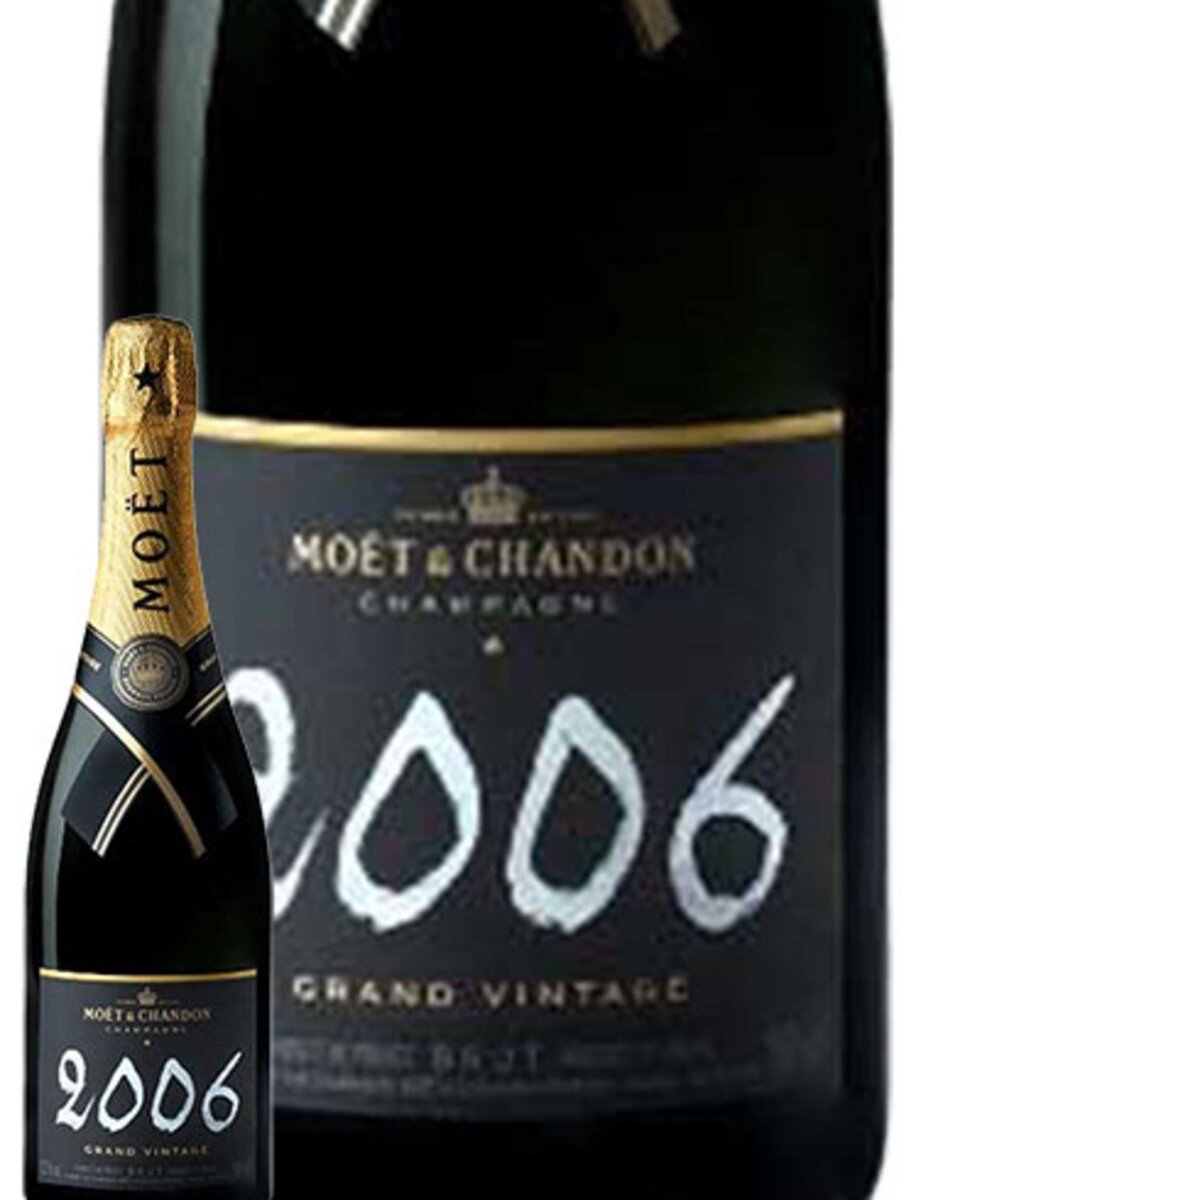 Moët et Chandon Champagne Grand Vintage 2006